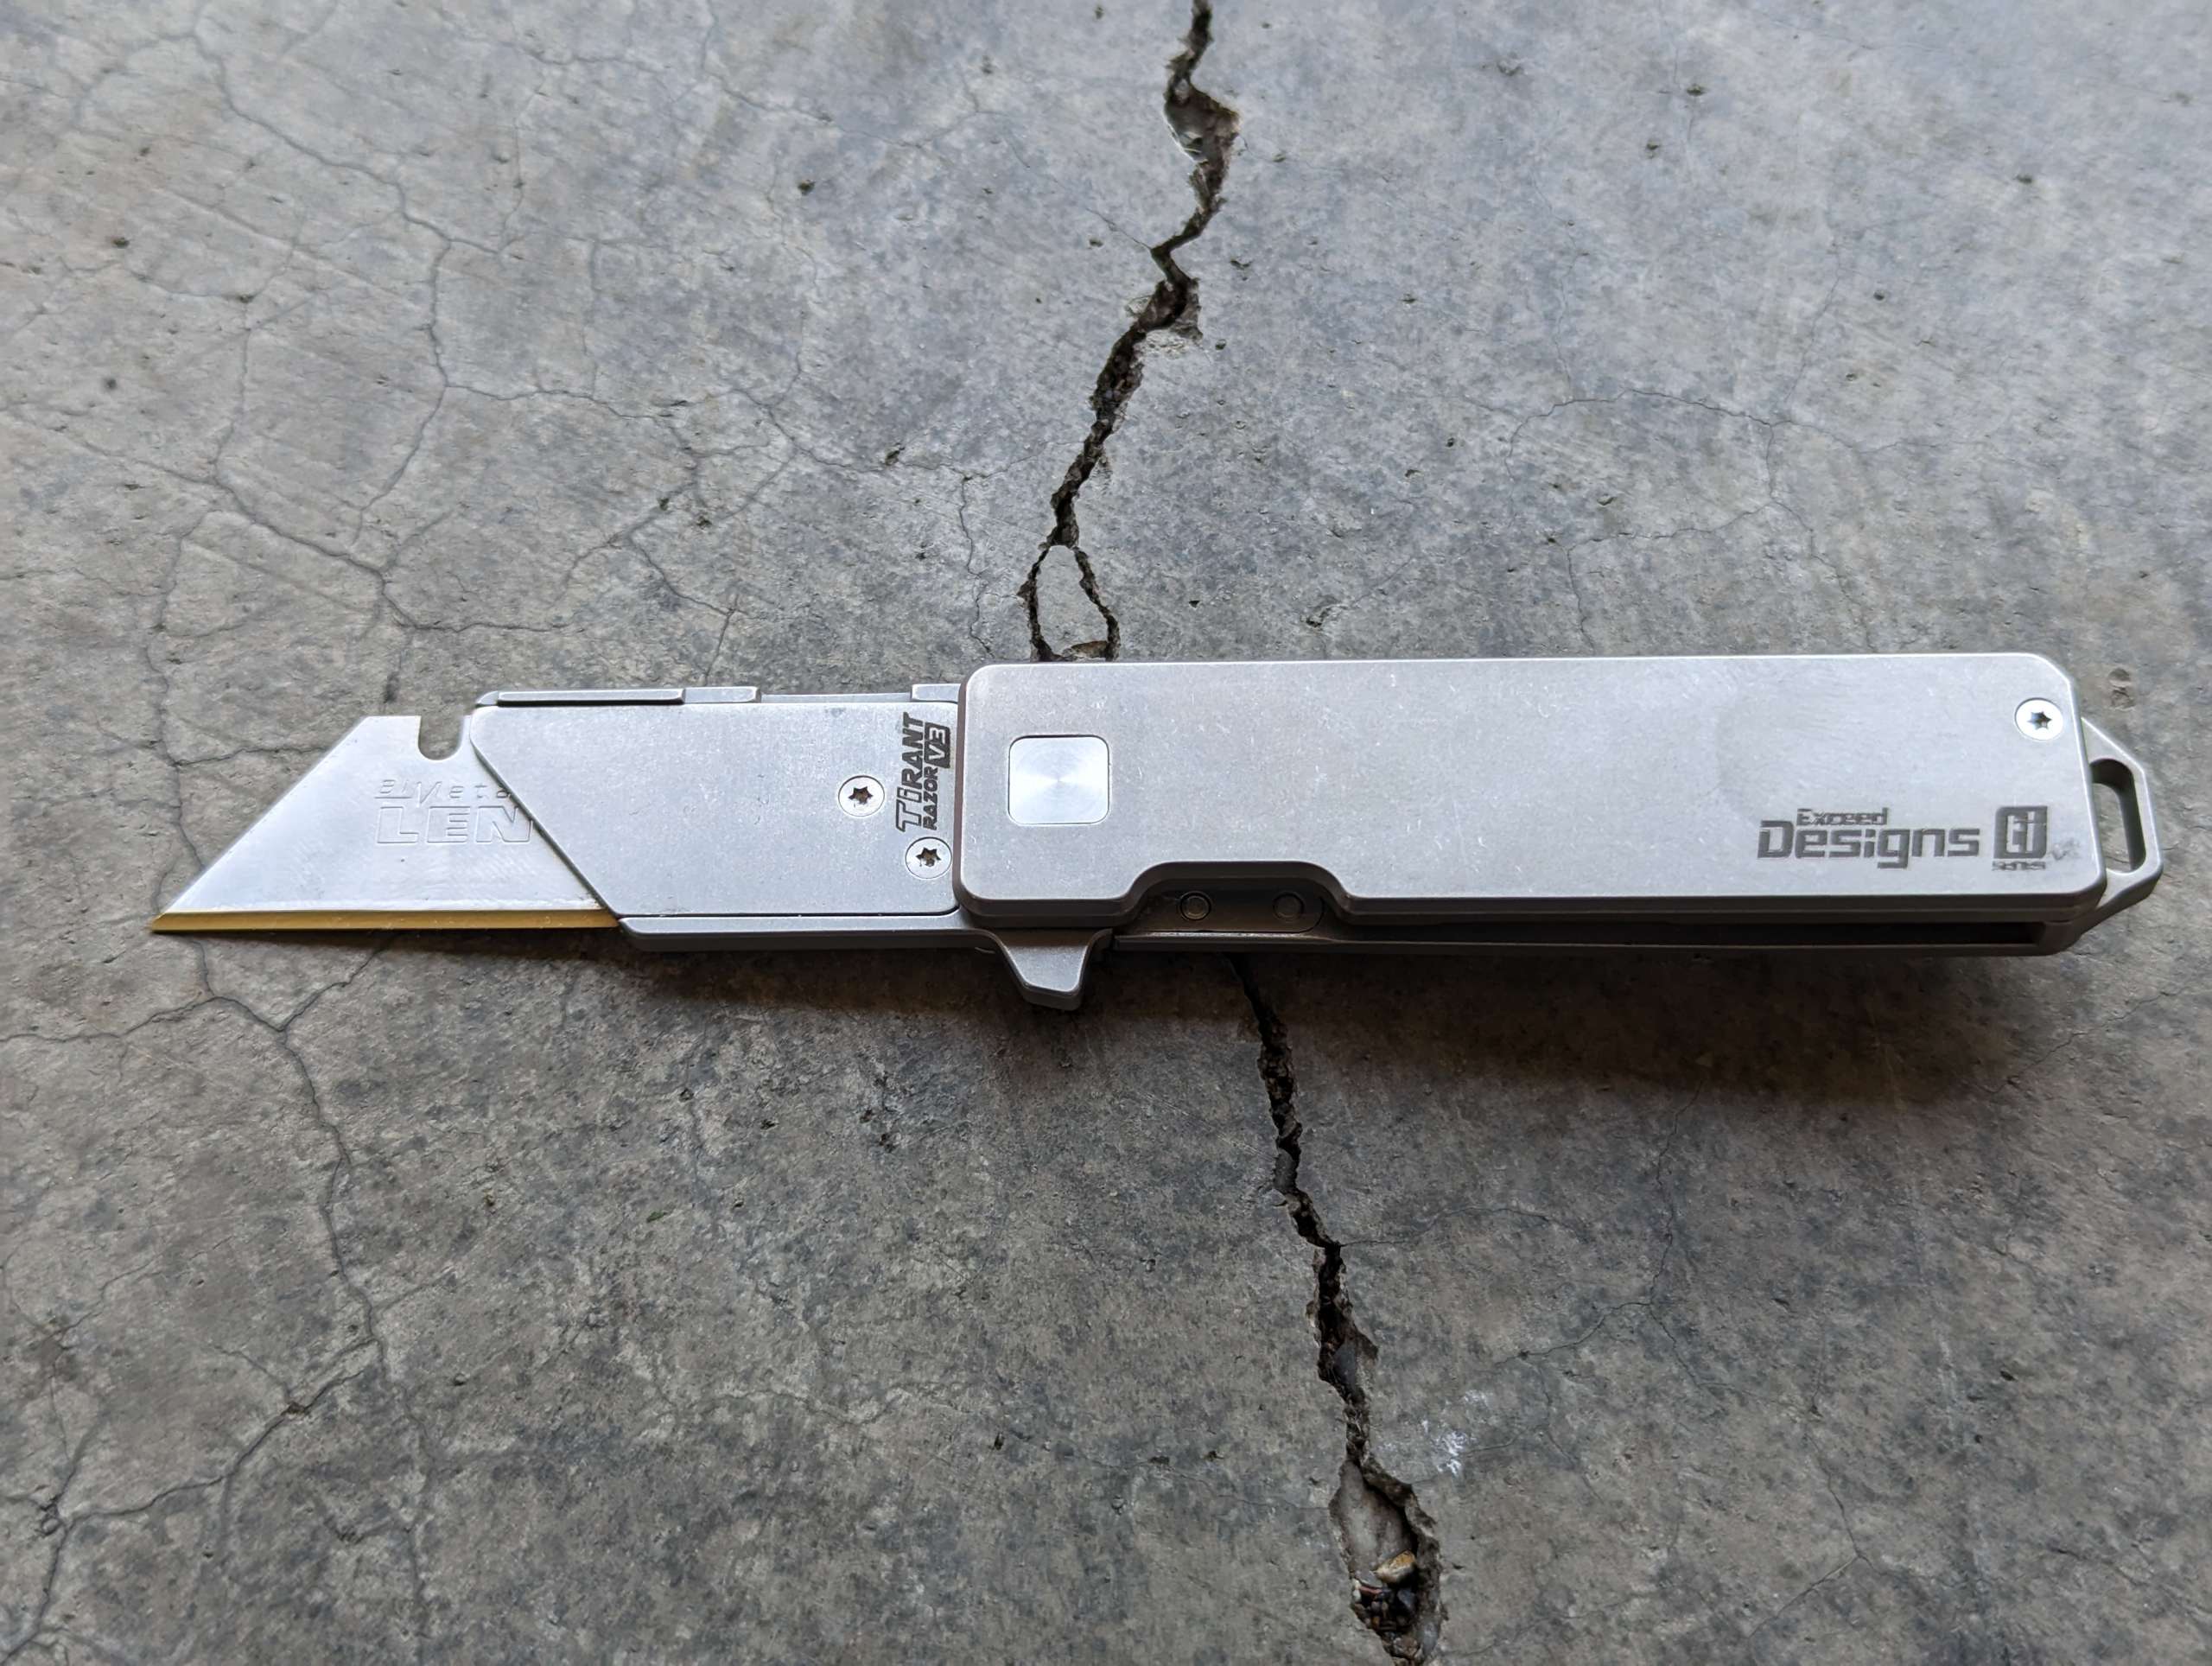 Exceed Designs TiRant Razor V3 titanium utility knife review - the 